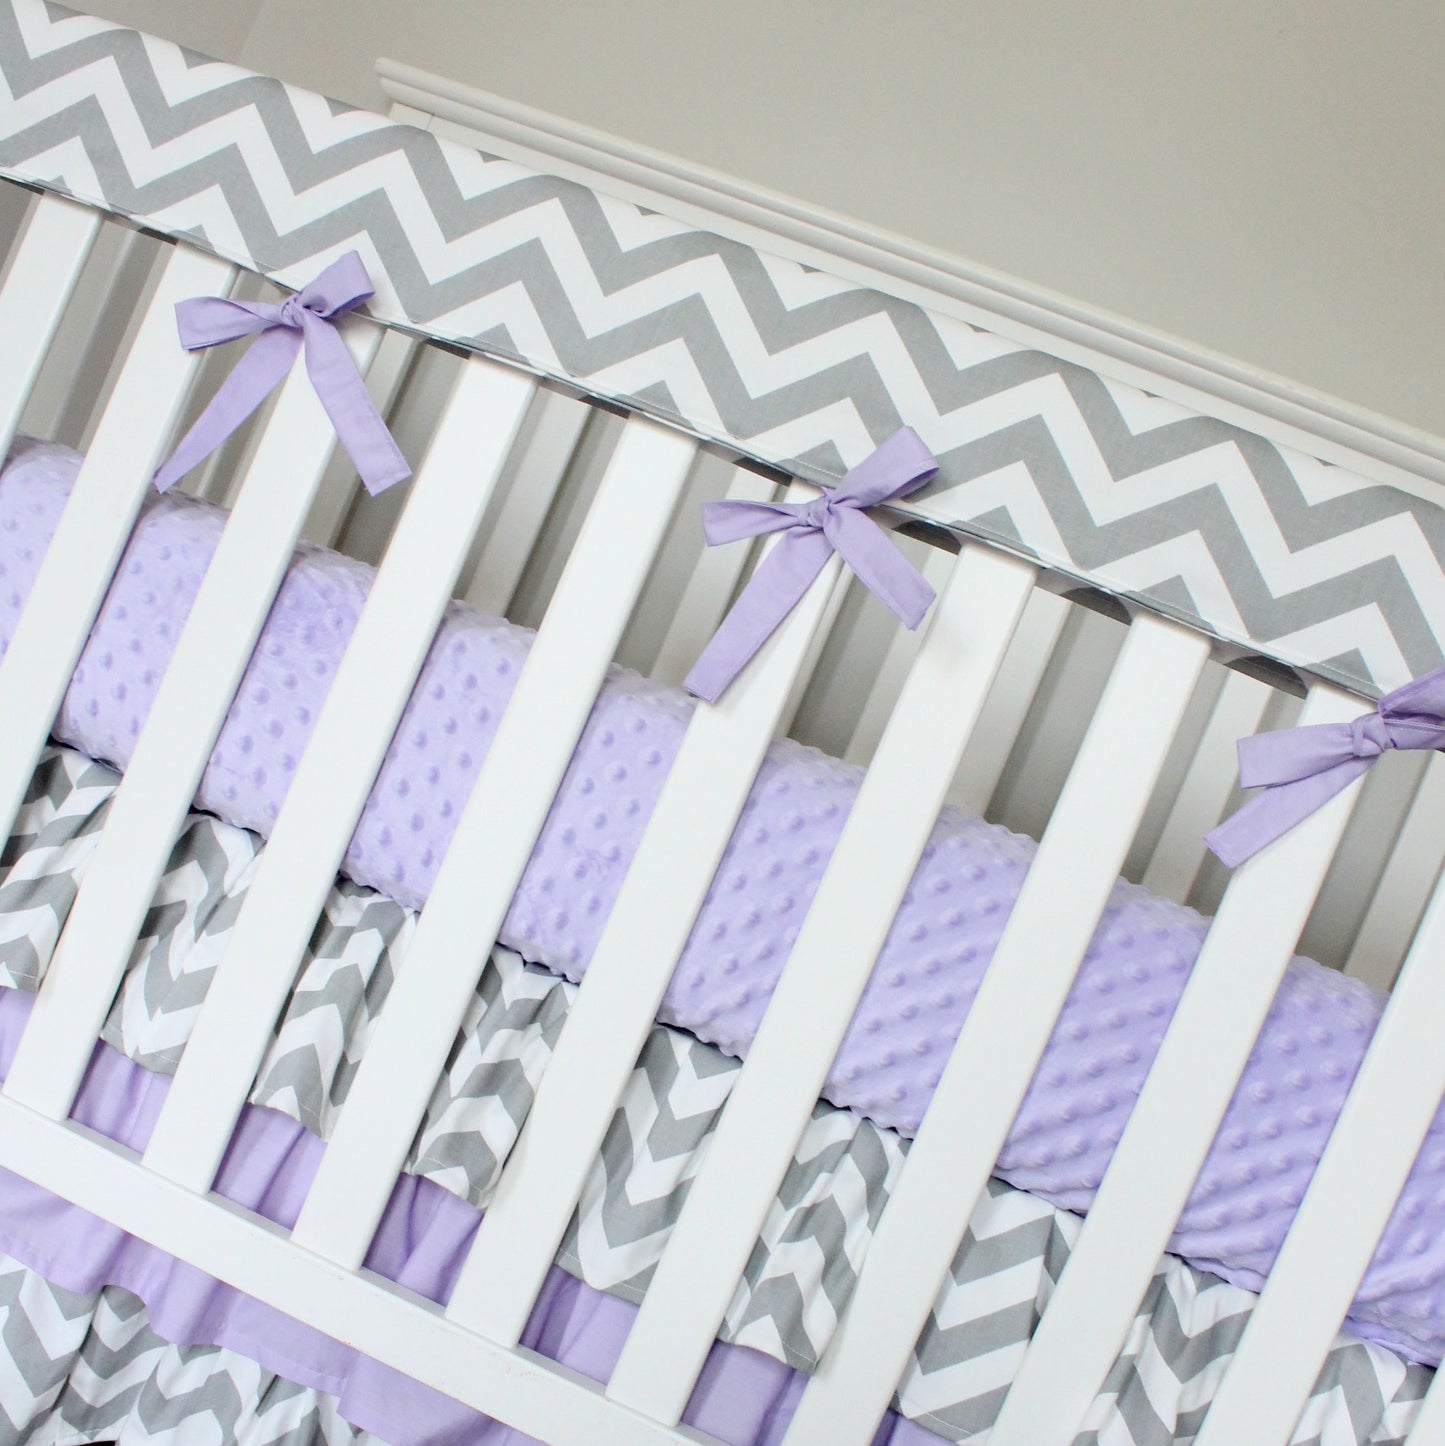 Girl baby bedding. Lavender chevron 3 tiered ruffled crib skirt crib bedding